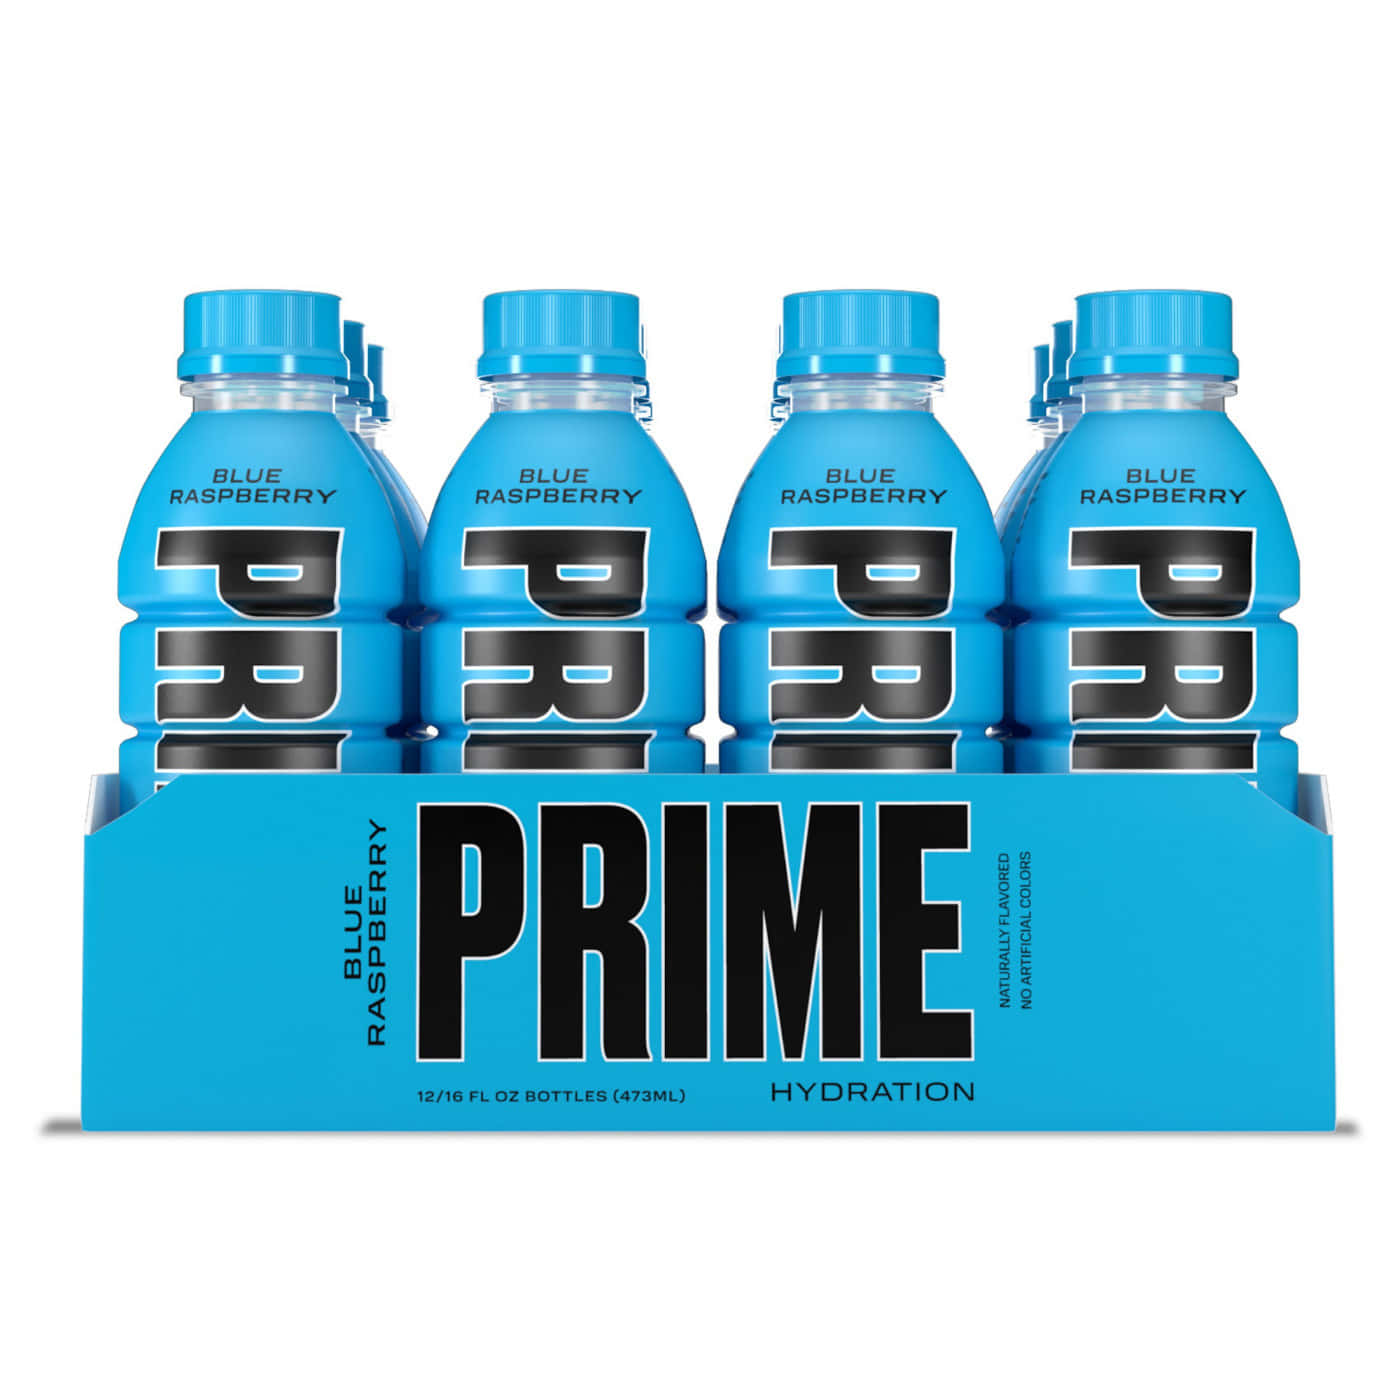 Prime Blue Raspberry Hydration Drink Pack Wallpaper